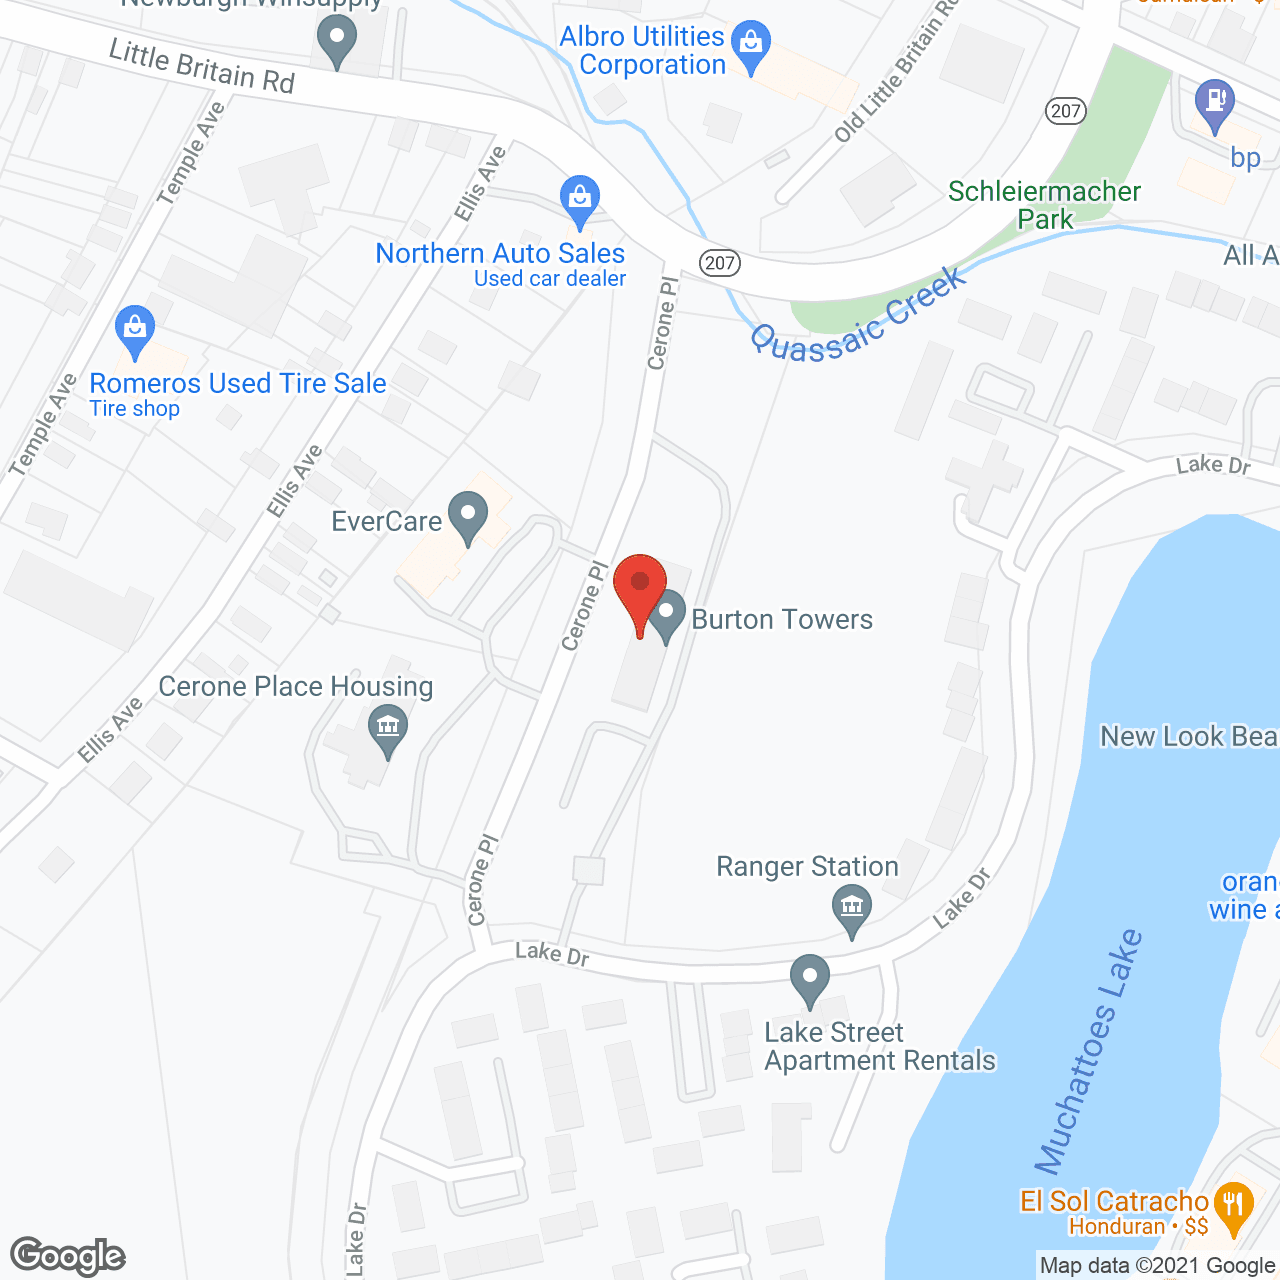 Burton Towers in google map